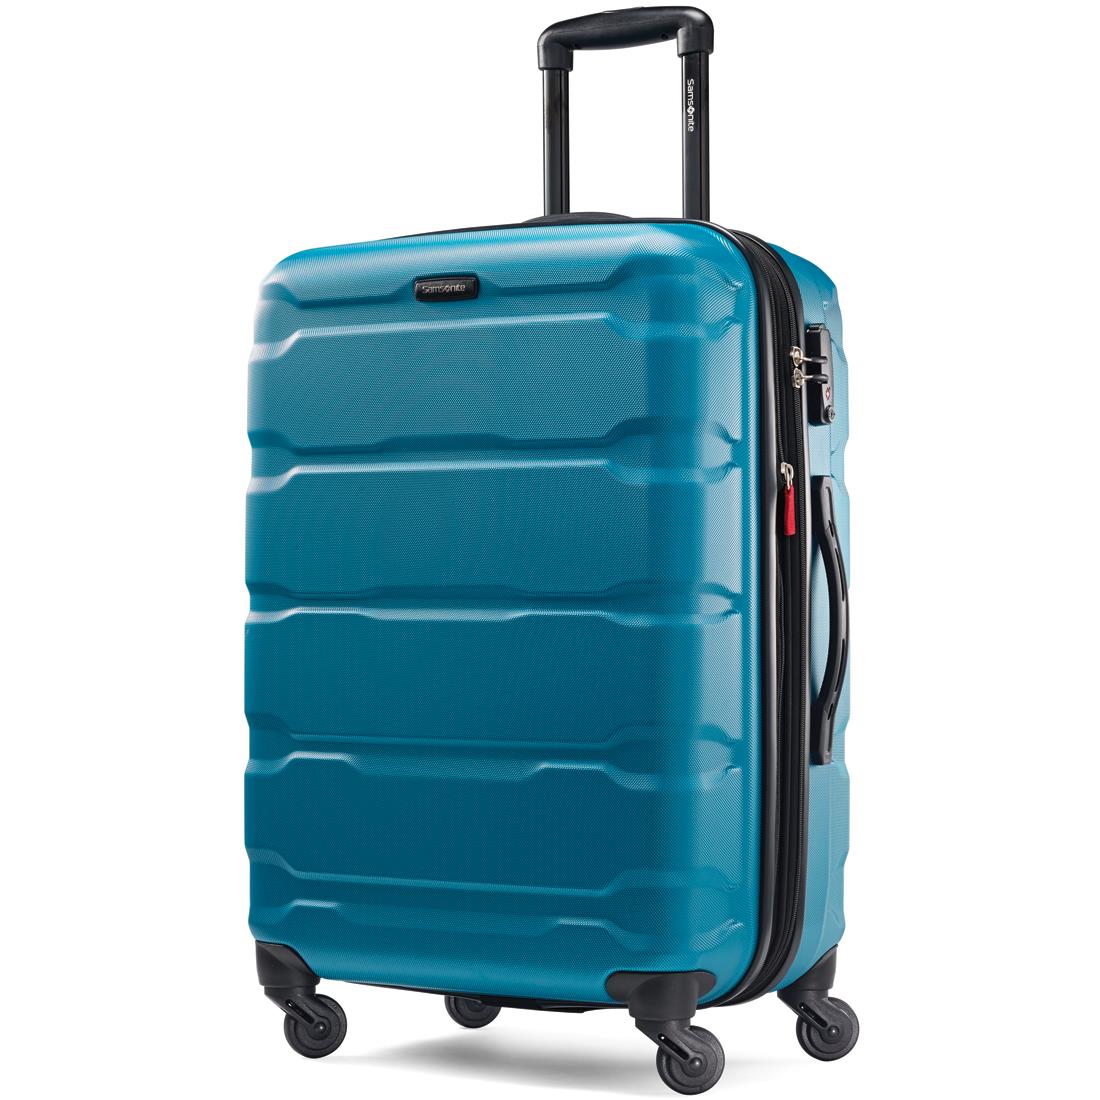 Samsonite Omni 24 Inch Hardside Spinner Luggage Suitcase Blue (68309-2479)